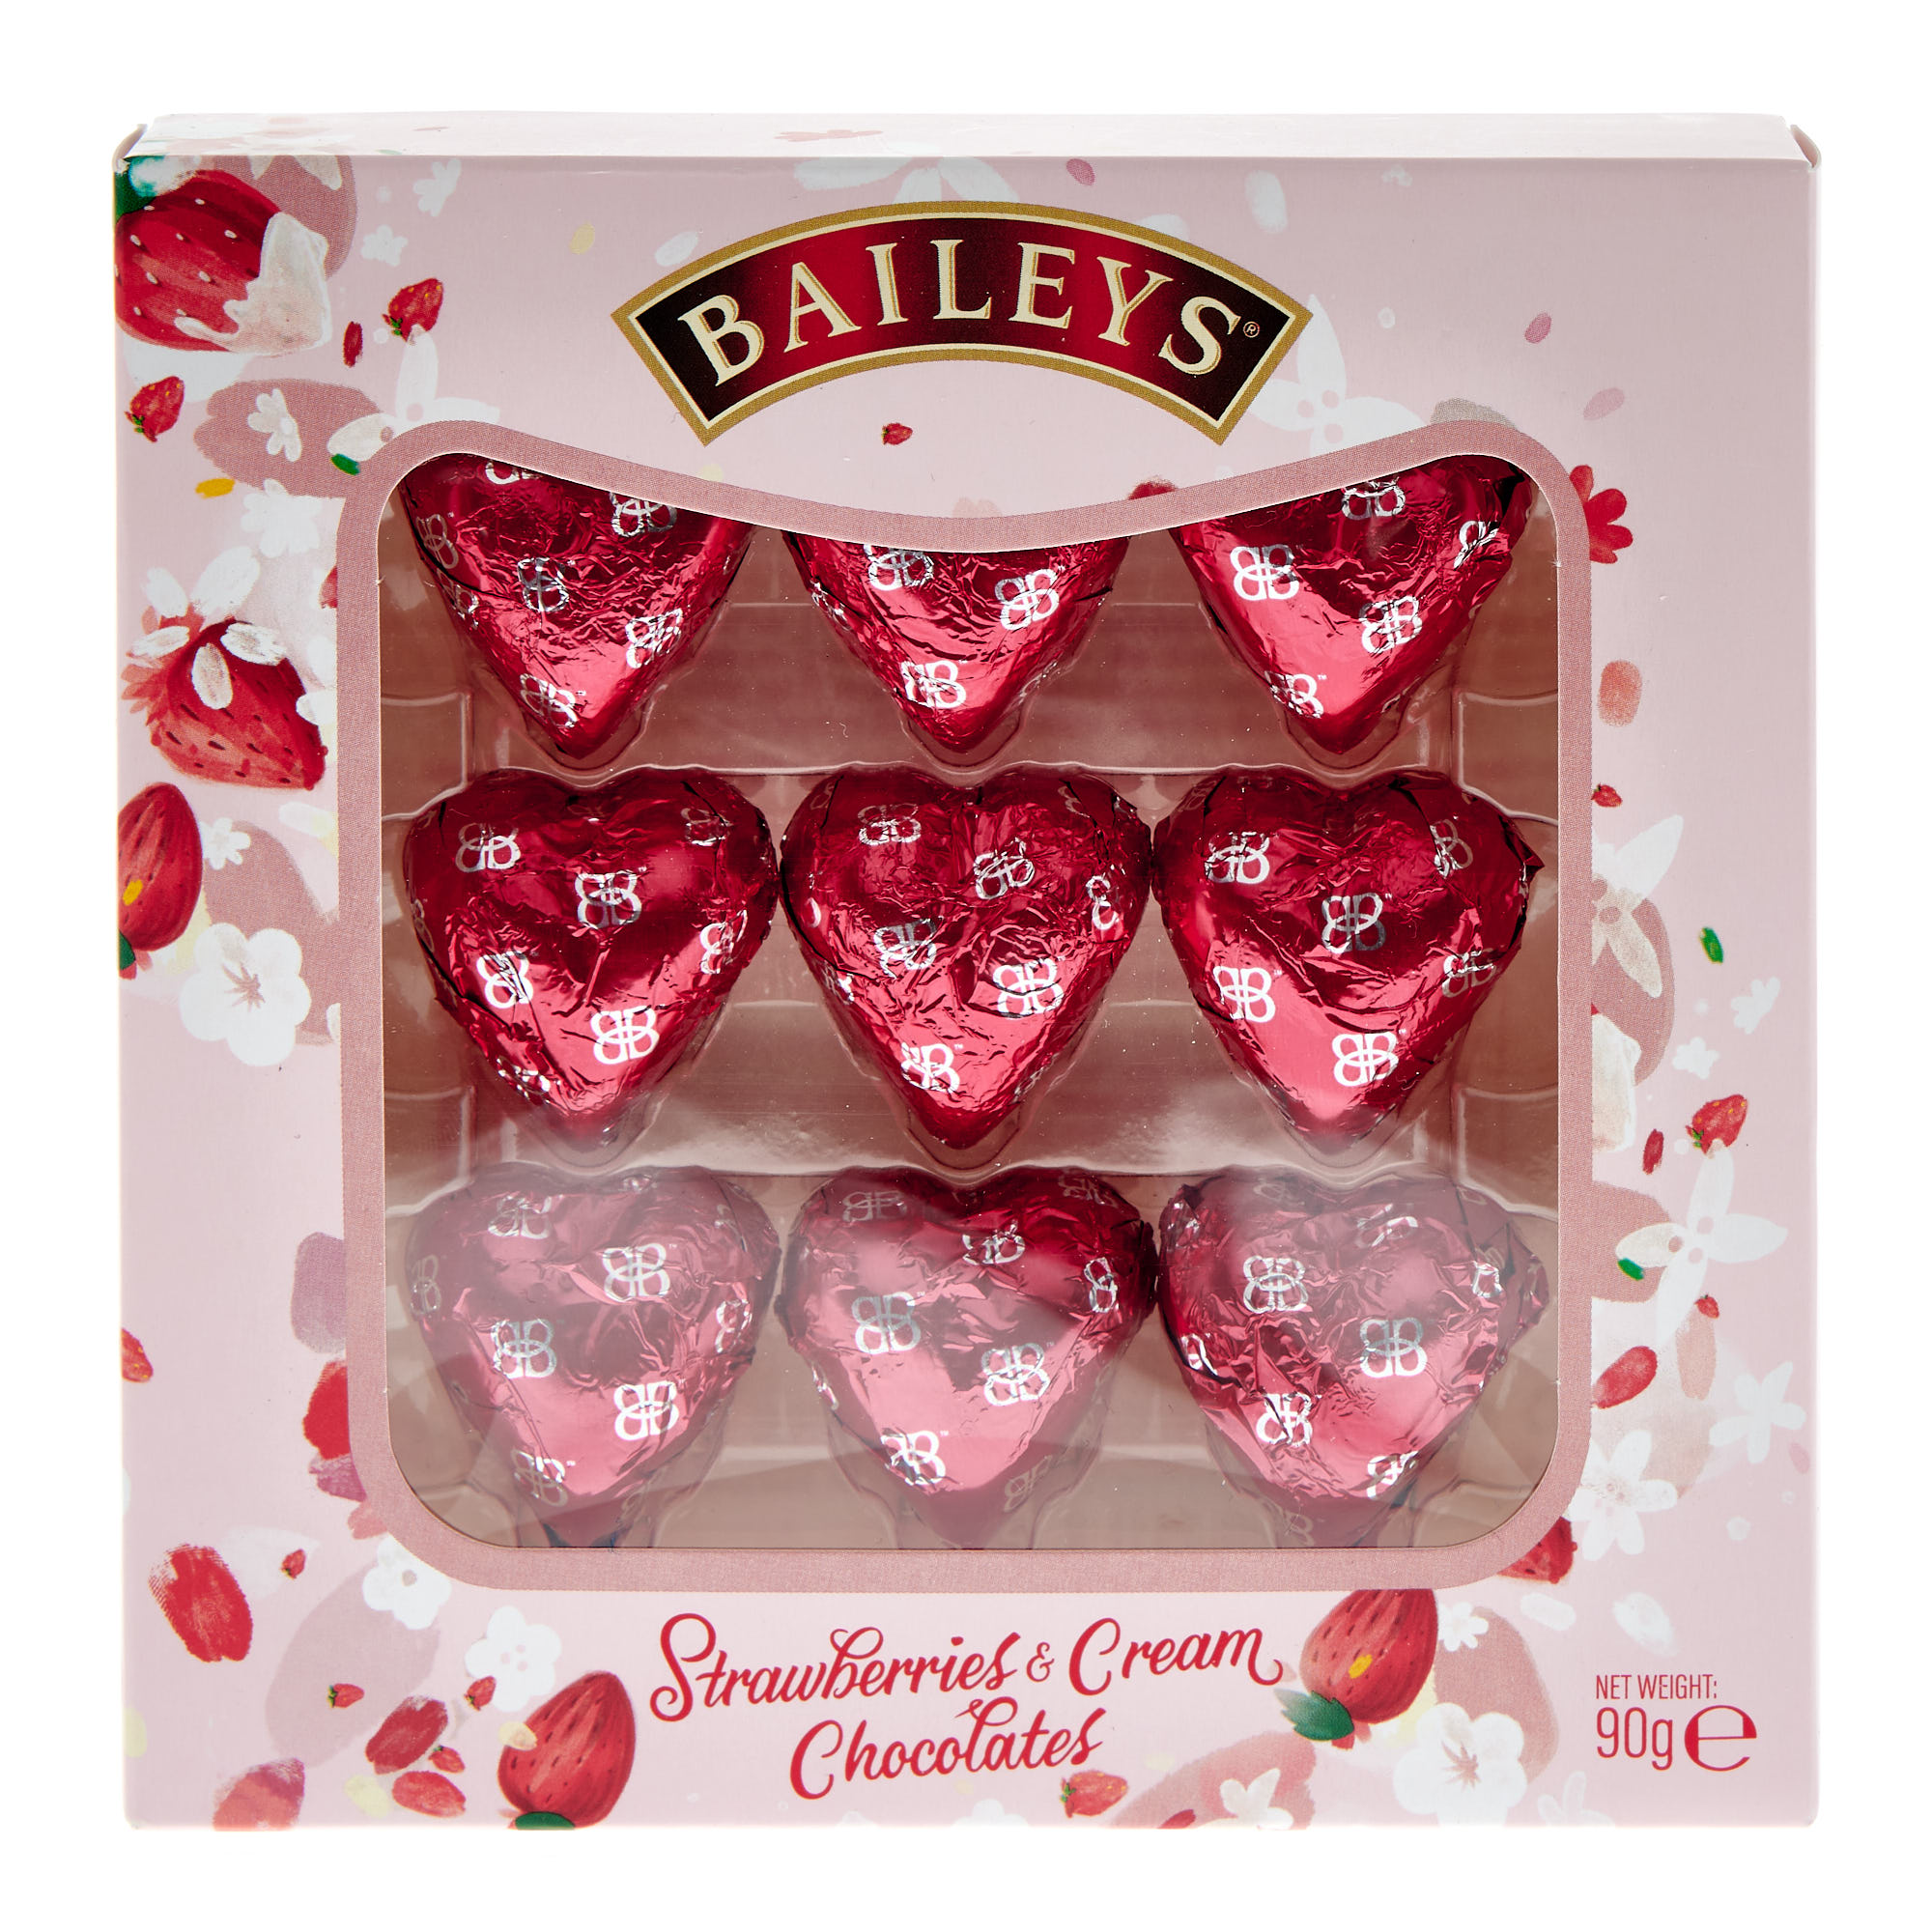 Baileys Strawberries & Cream Chocolates